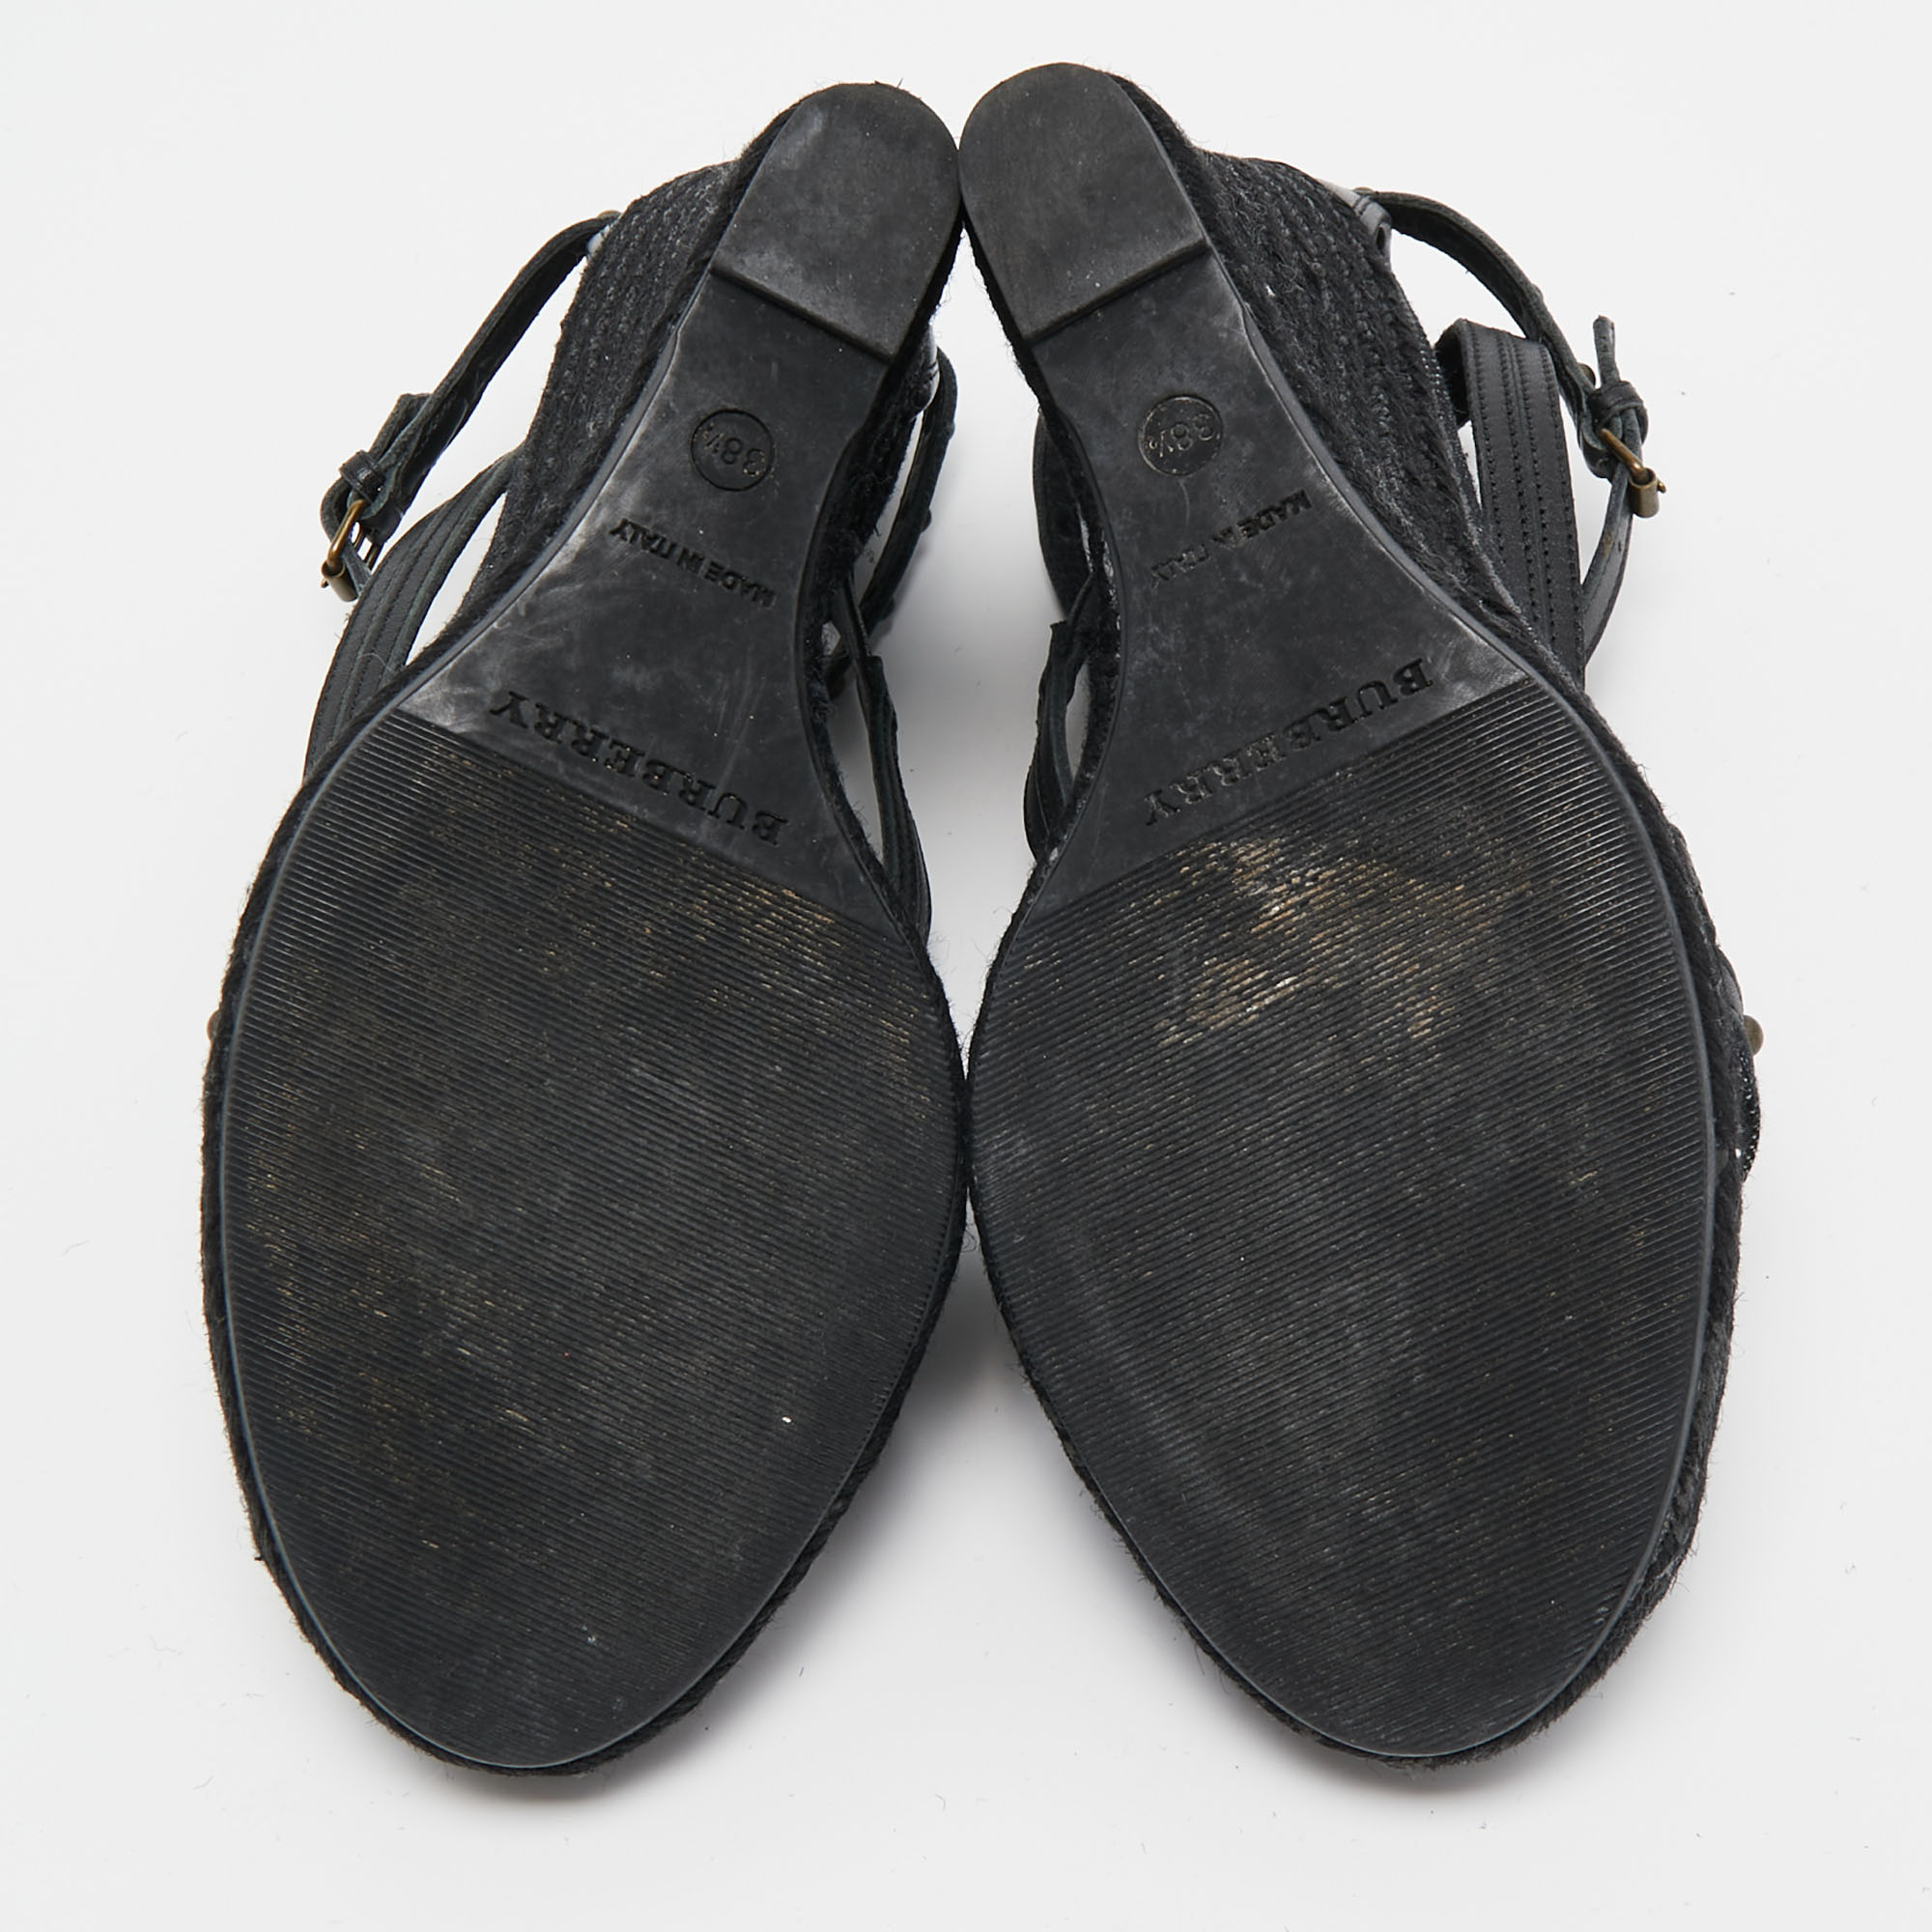 Burberry Black Leather And Denim Studded Platform Wedge Sandals Size 38.5